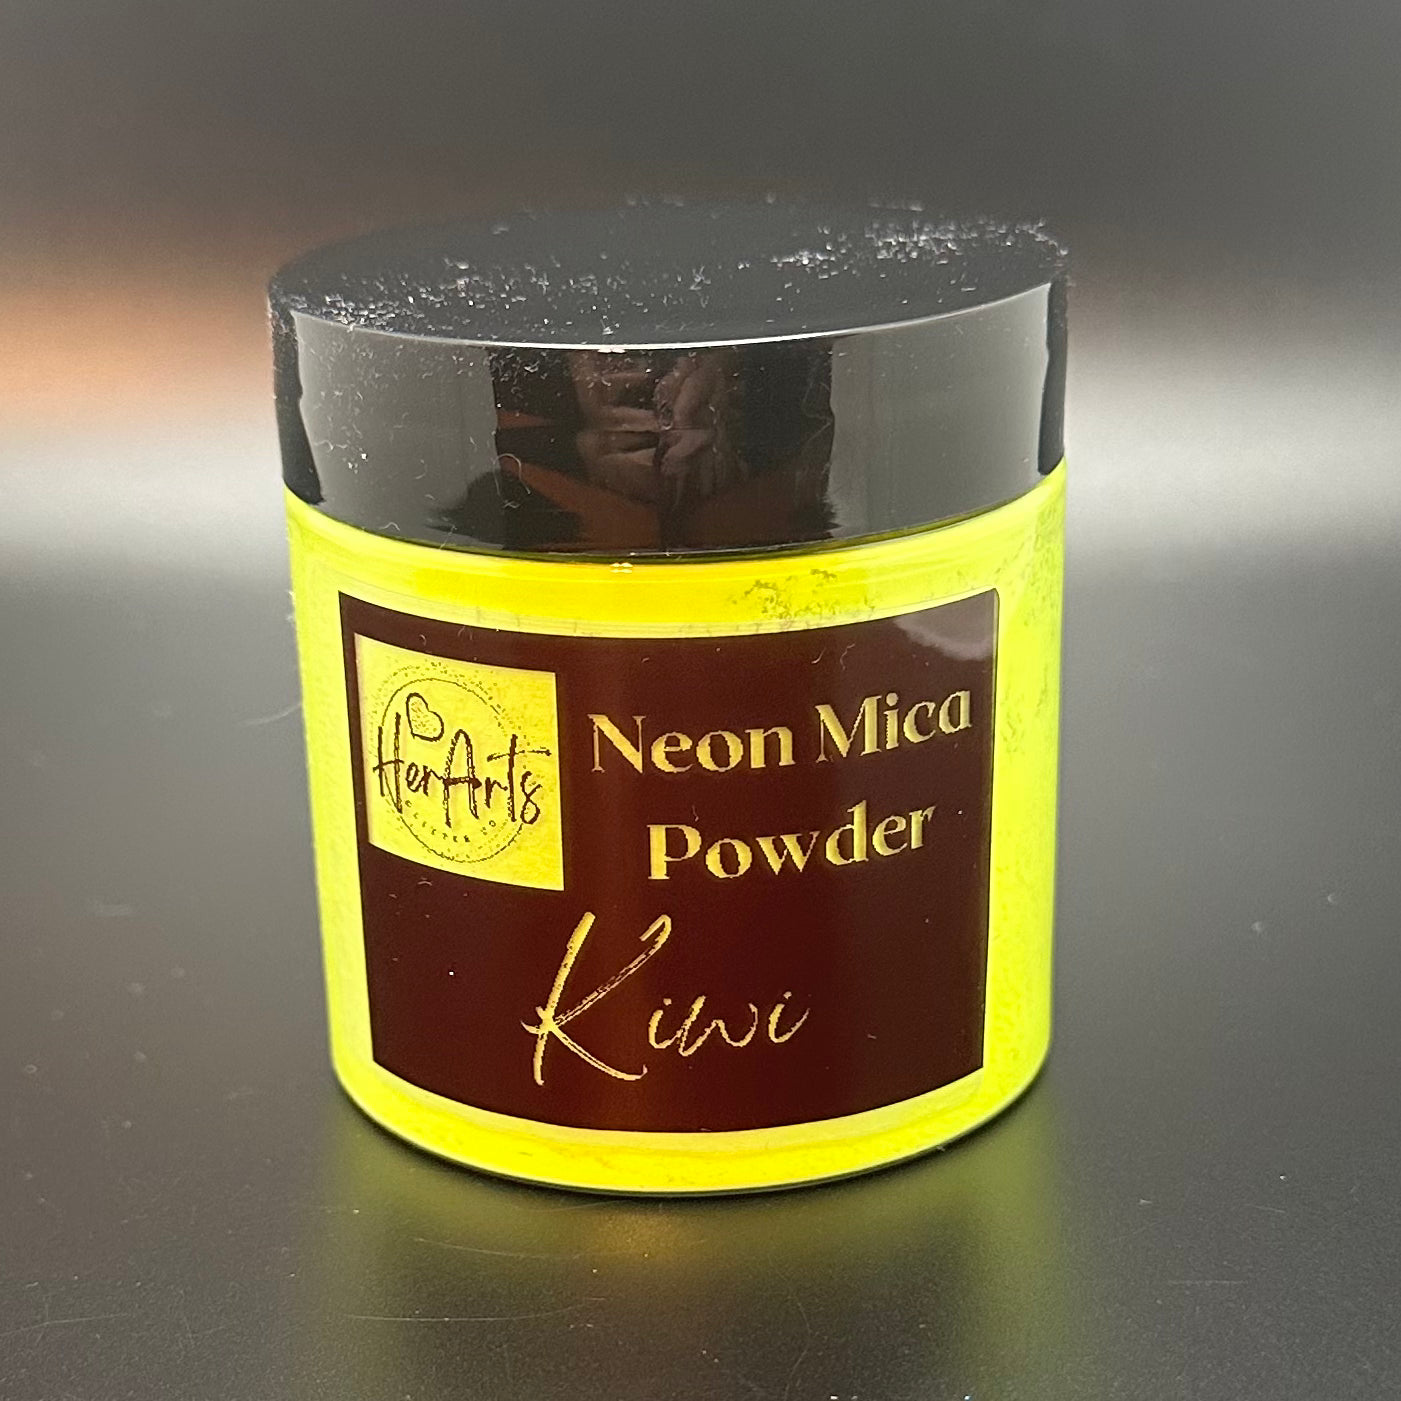 Neon Mica Powder, Kiwi